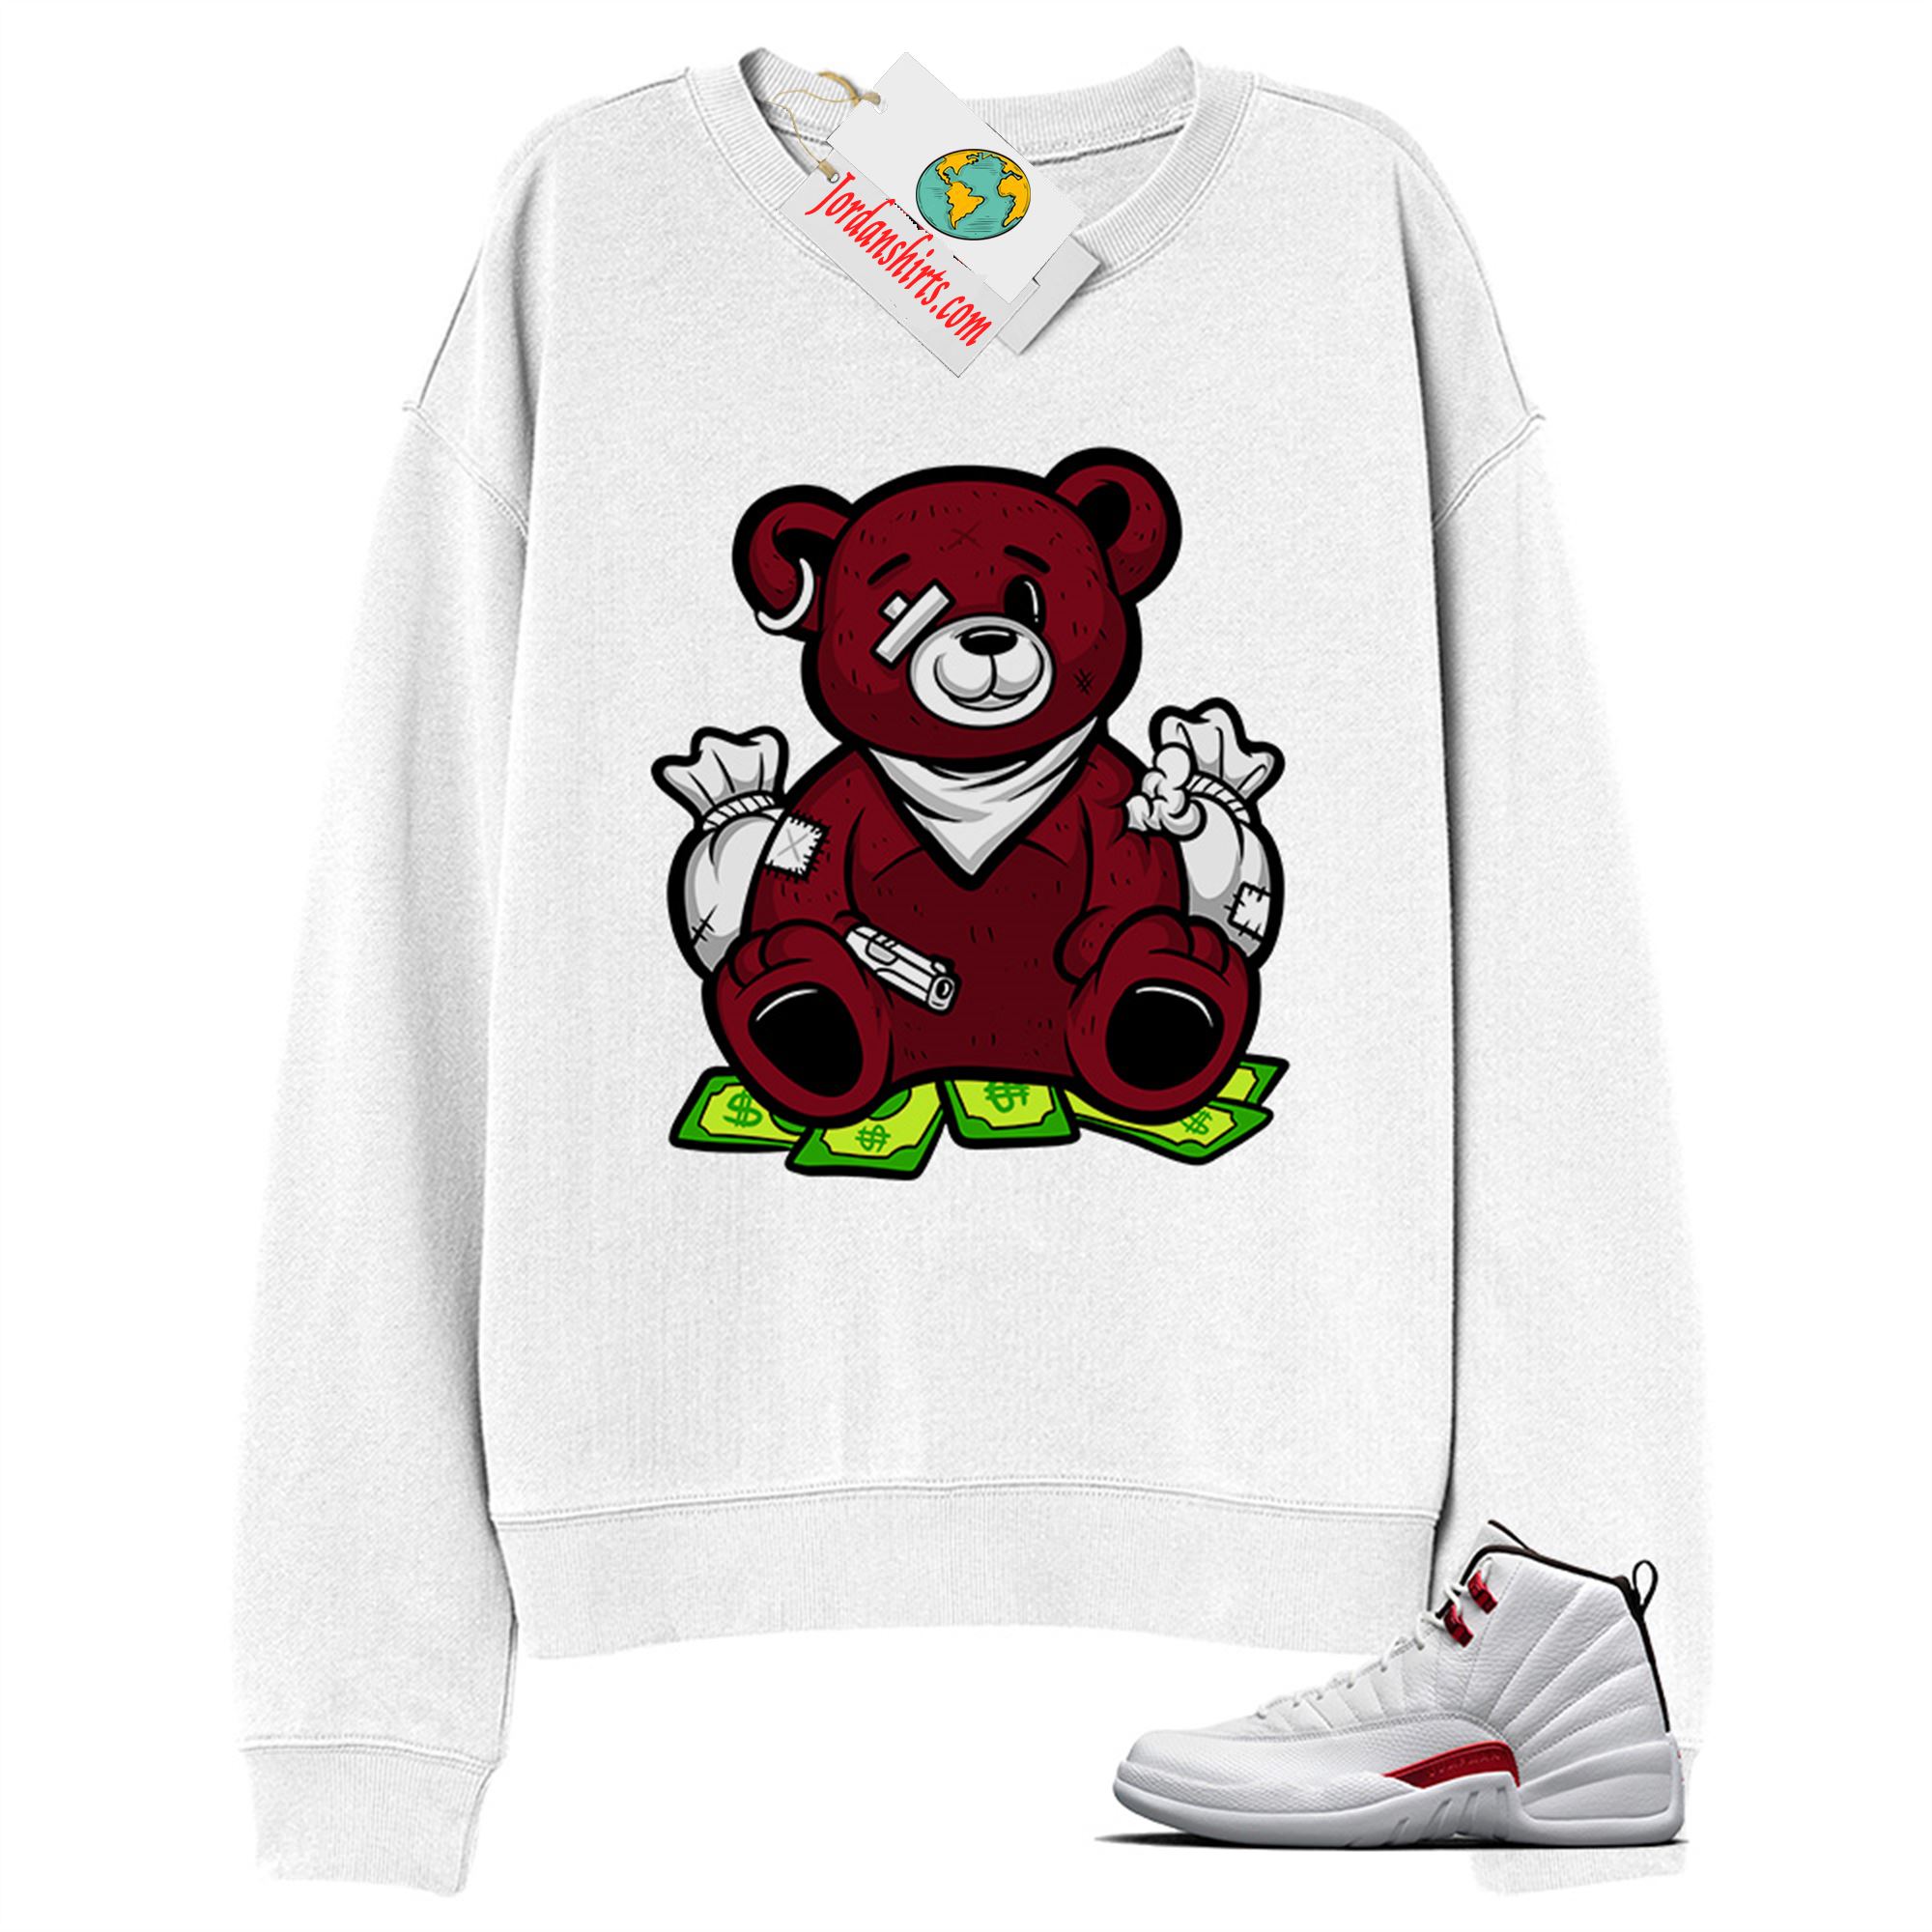 Jordan 12 Sweatshirt, Rich Teddy Bear Gangster White Sweatshirt Air Jordan 12 Twist 12s Size Up To 5xl